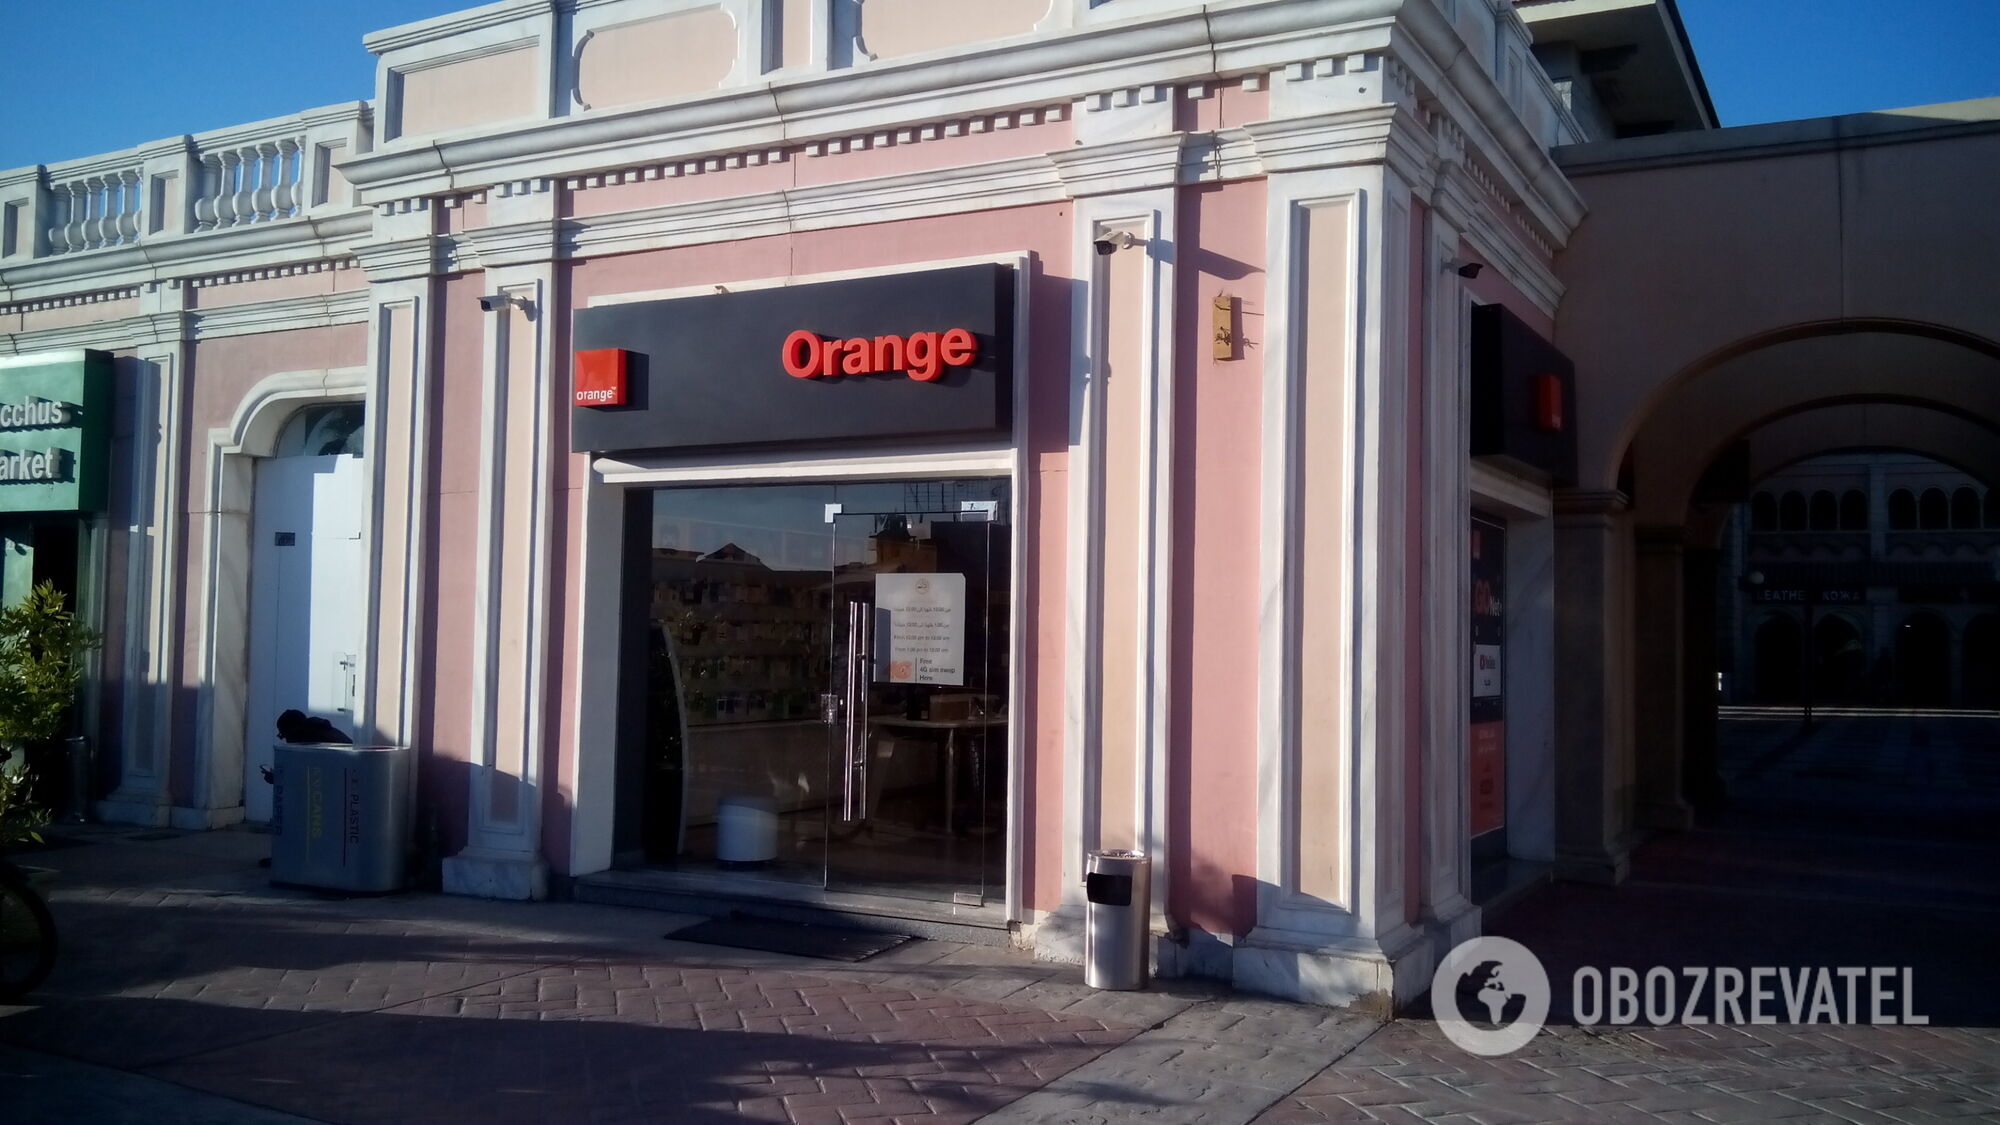 Офіс Orange в El Merkato - Шарм-еш-Шейх, Єгипет